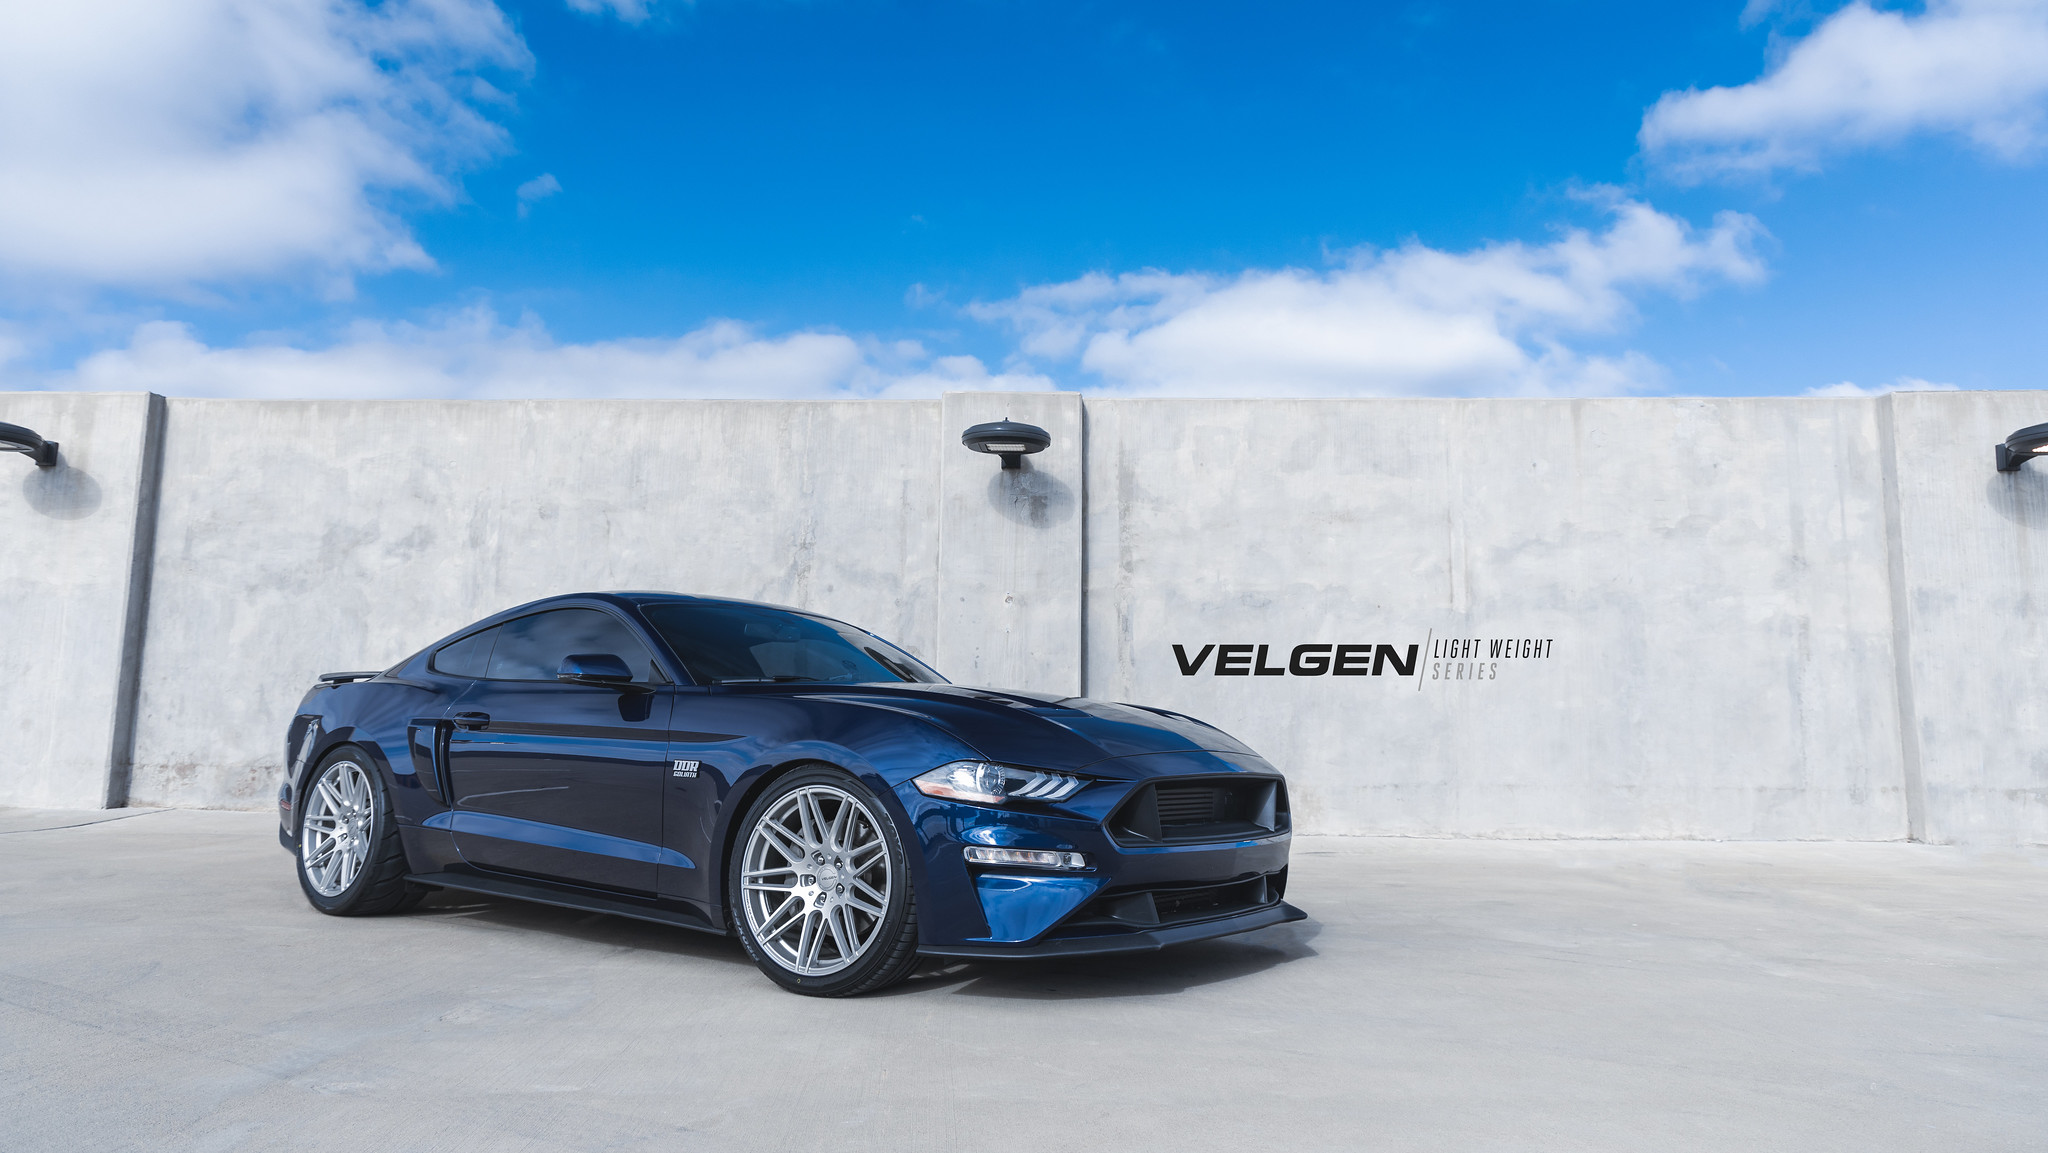 S650 Mustang Velgen wheels for your S650 Mustang | Vibe Motorsports 50863062563_ad1c4b7f41_k